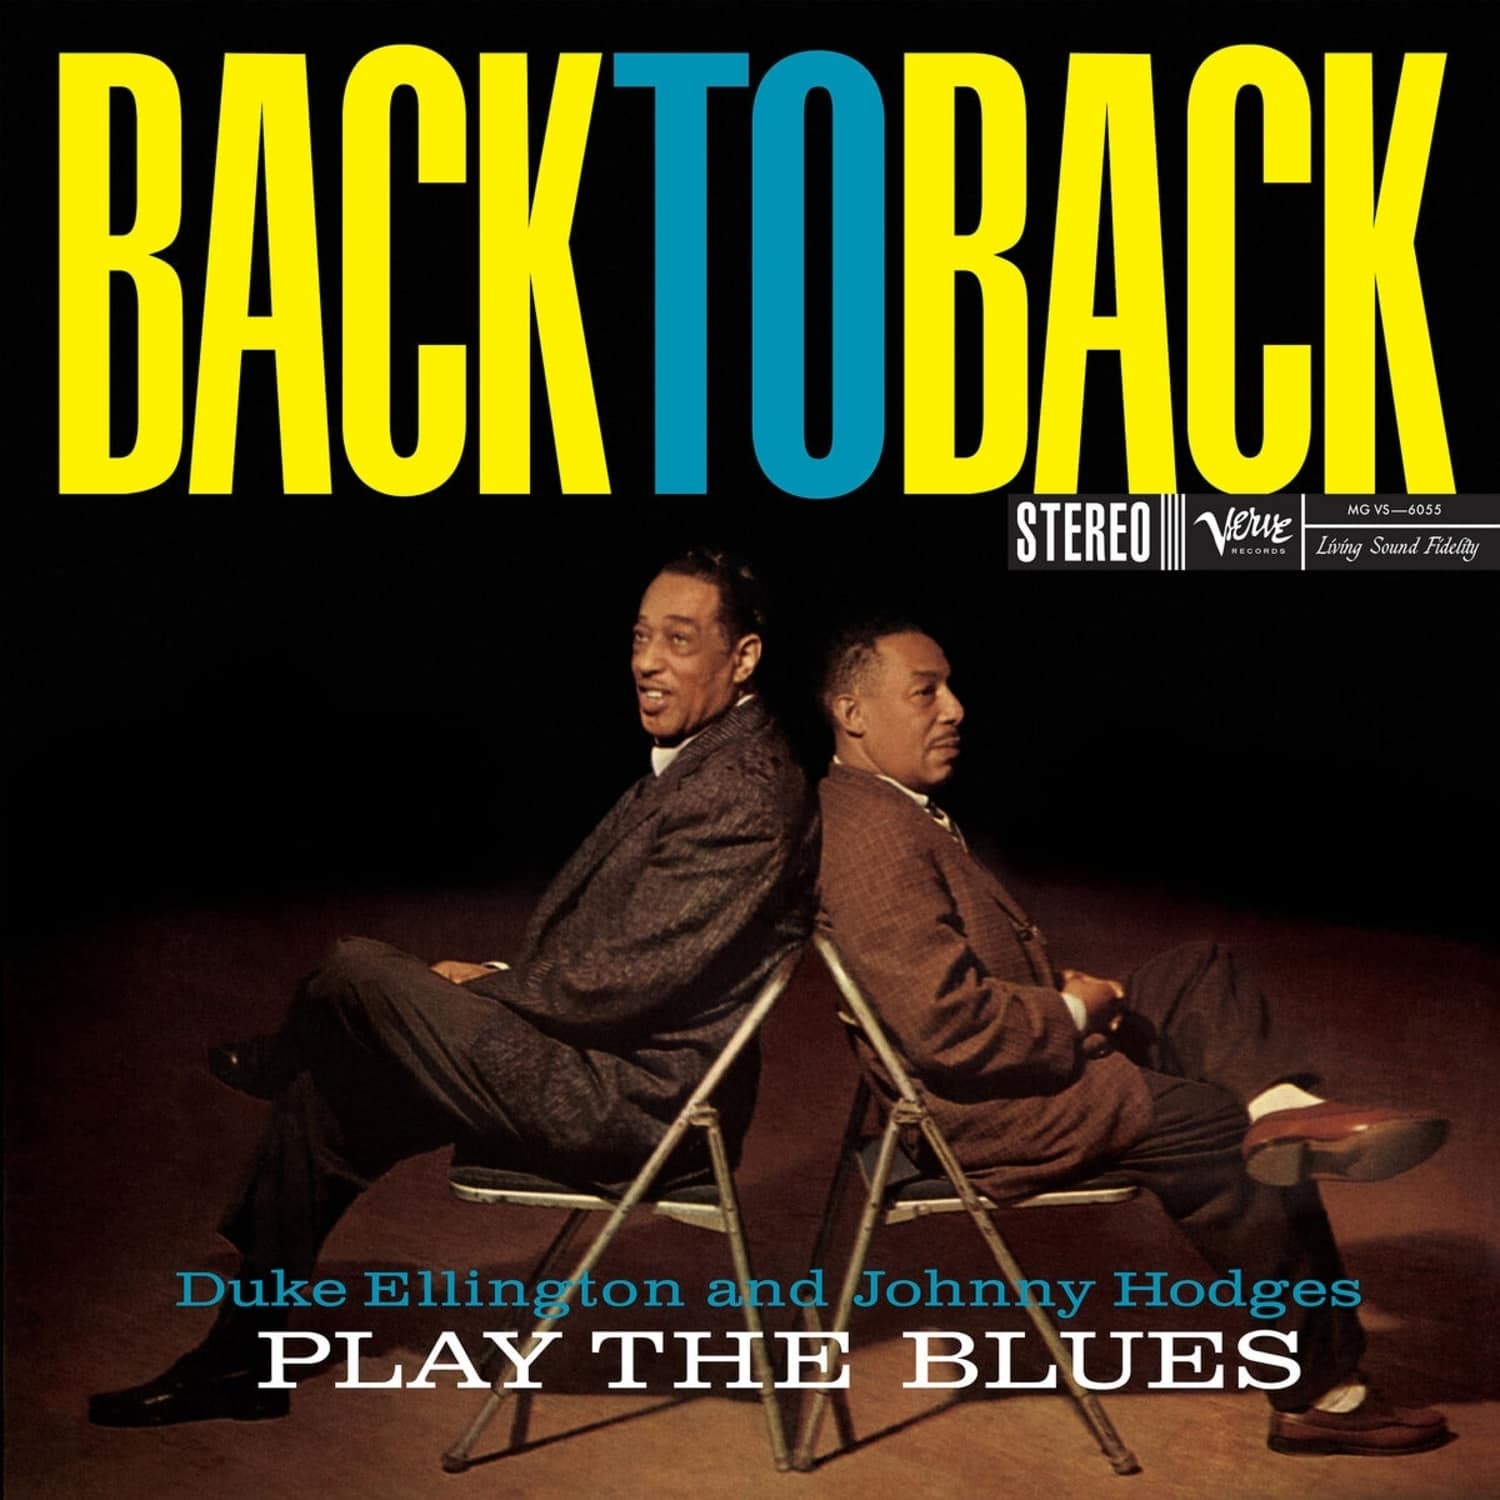 Duke Ellington & Johnny Hodges - BACK TO BACK 